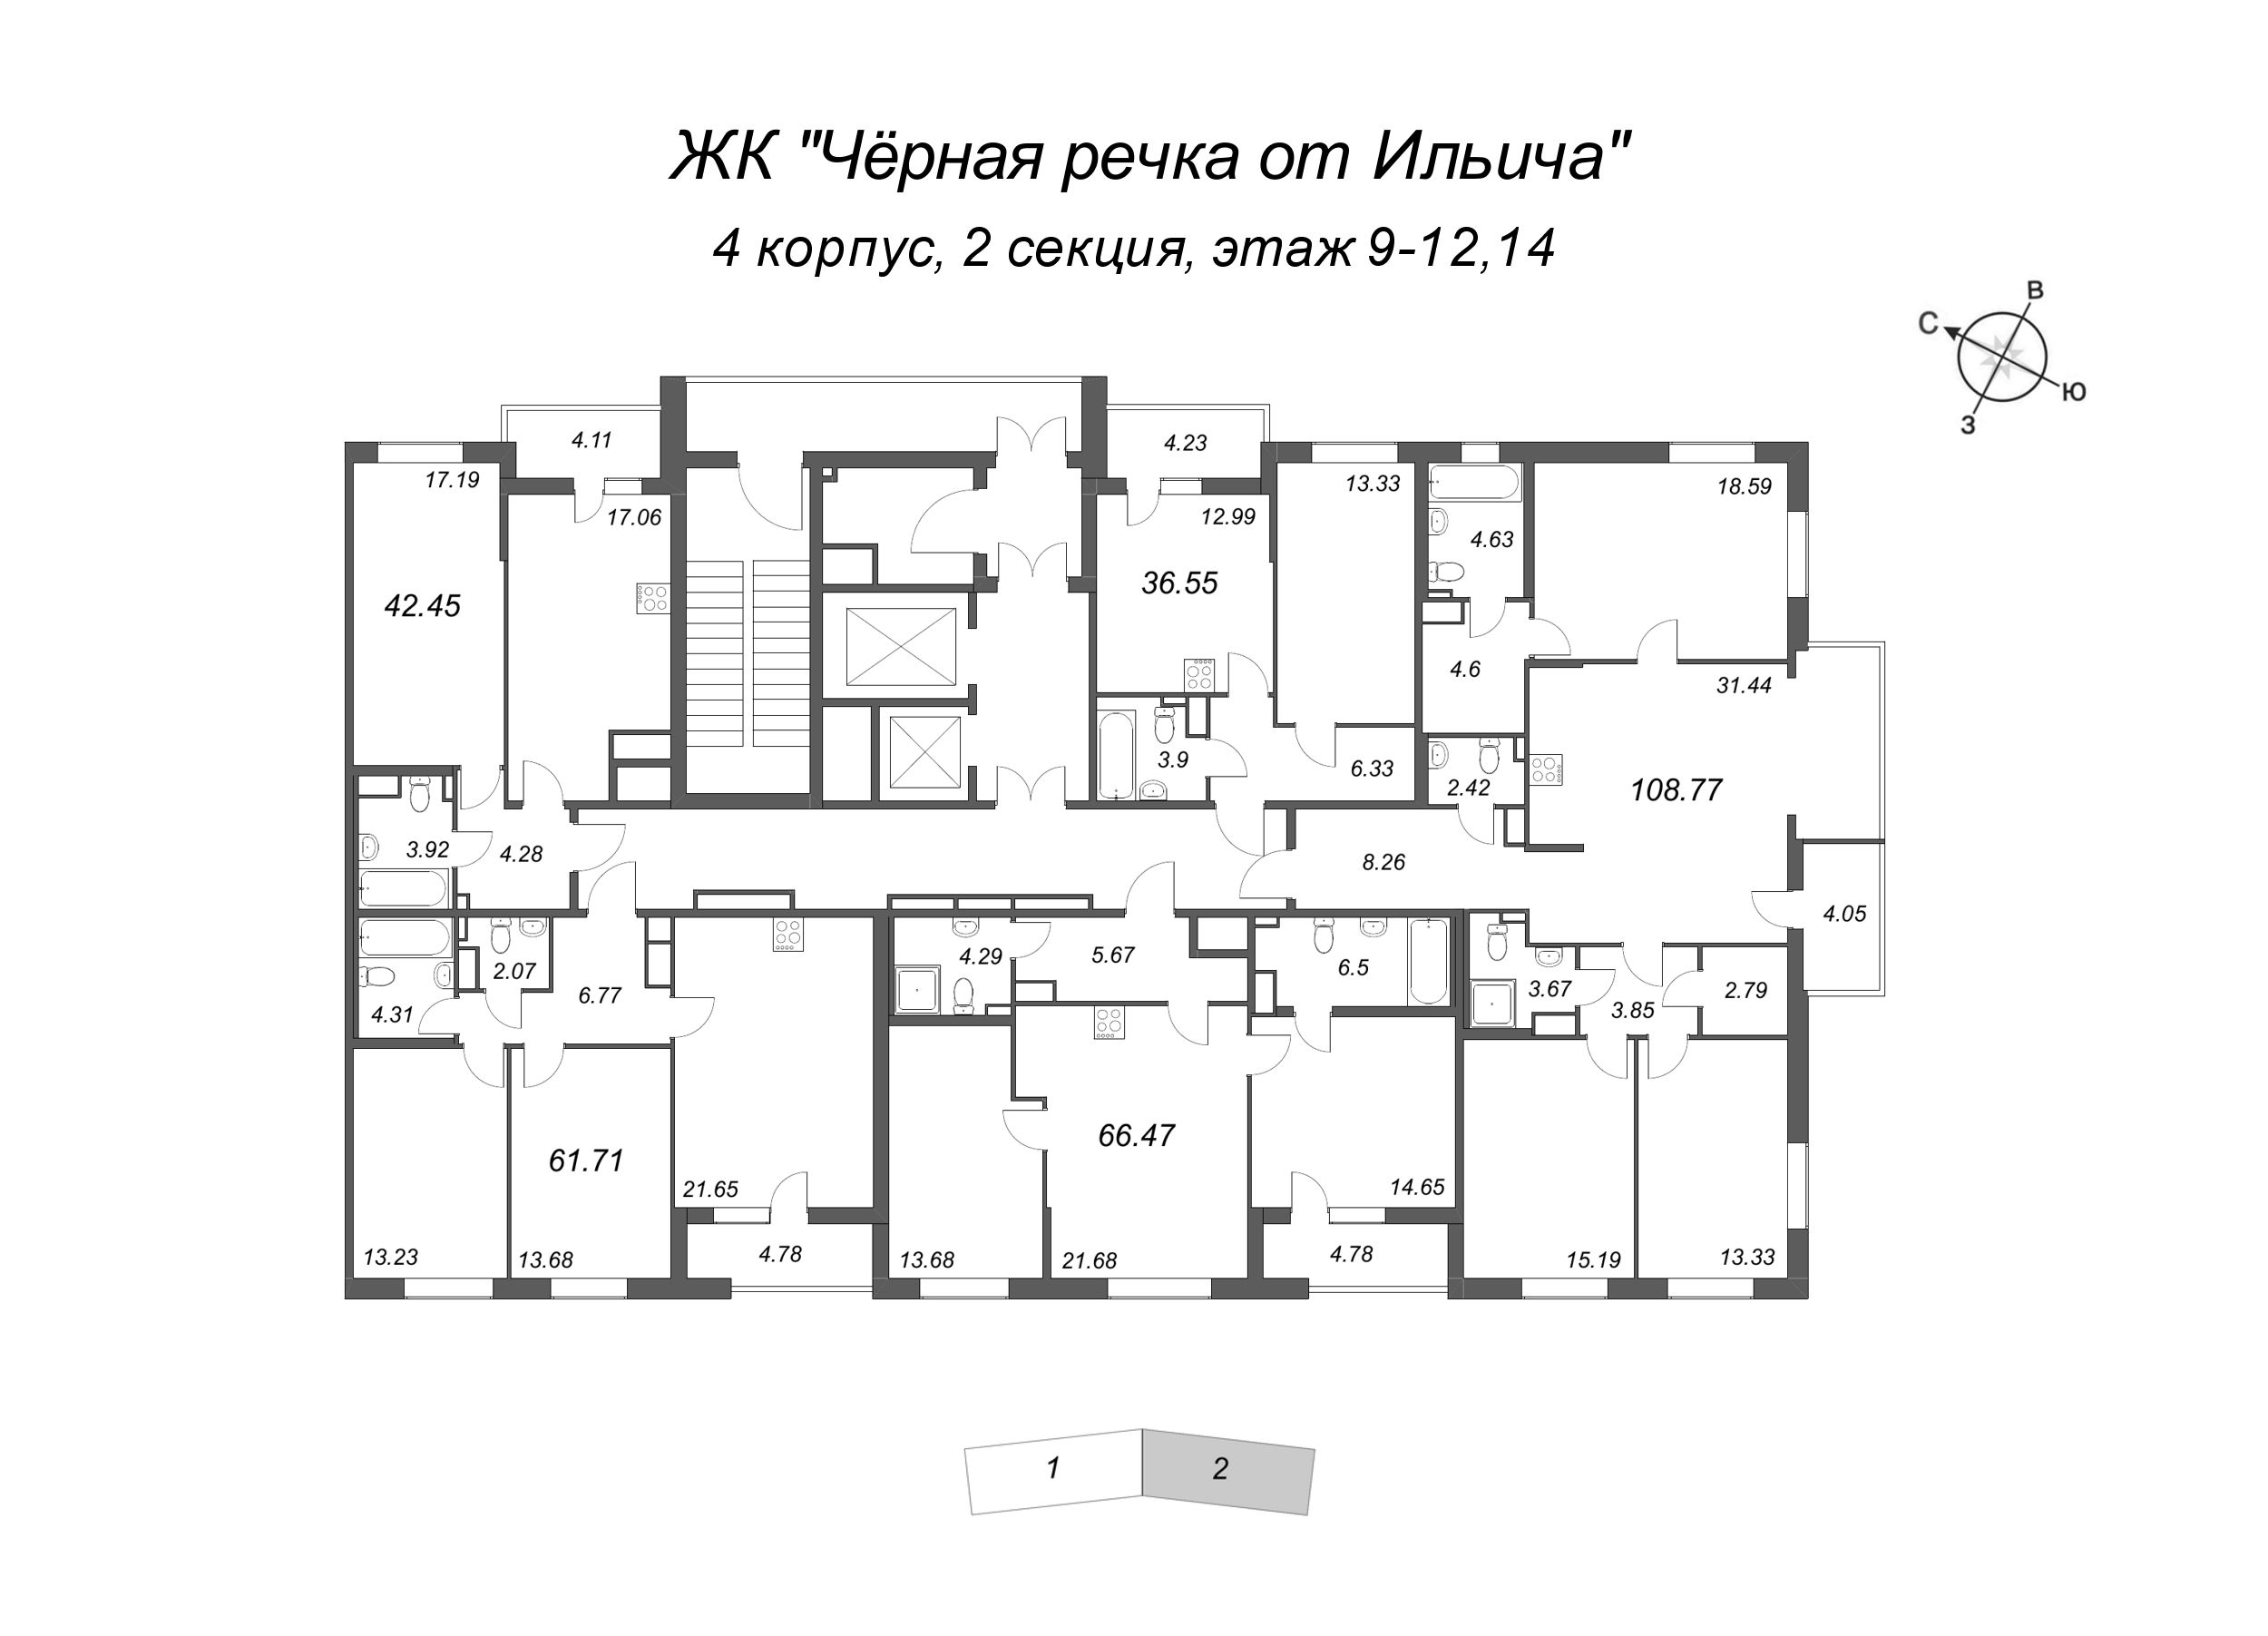 1-комнатная квартира, 36.55 м² в ЖК "Чёрная речка от Ильича" - планировка этажа